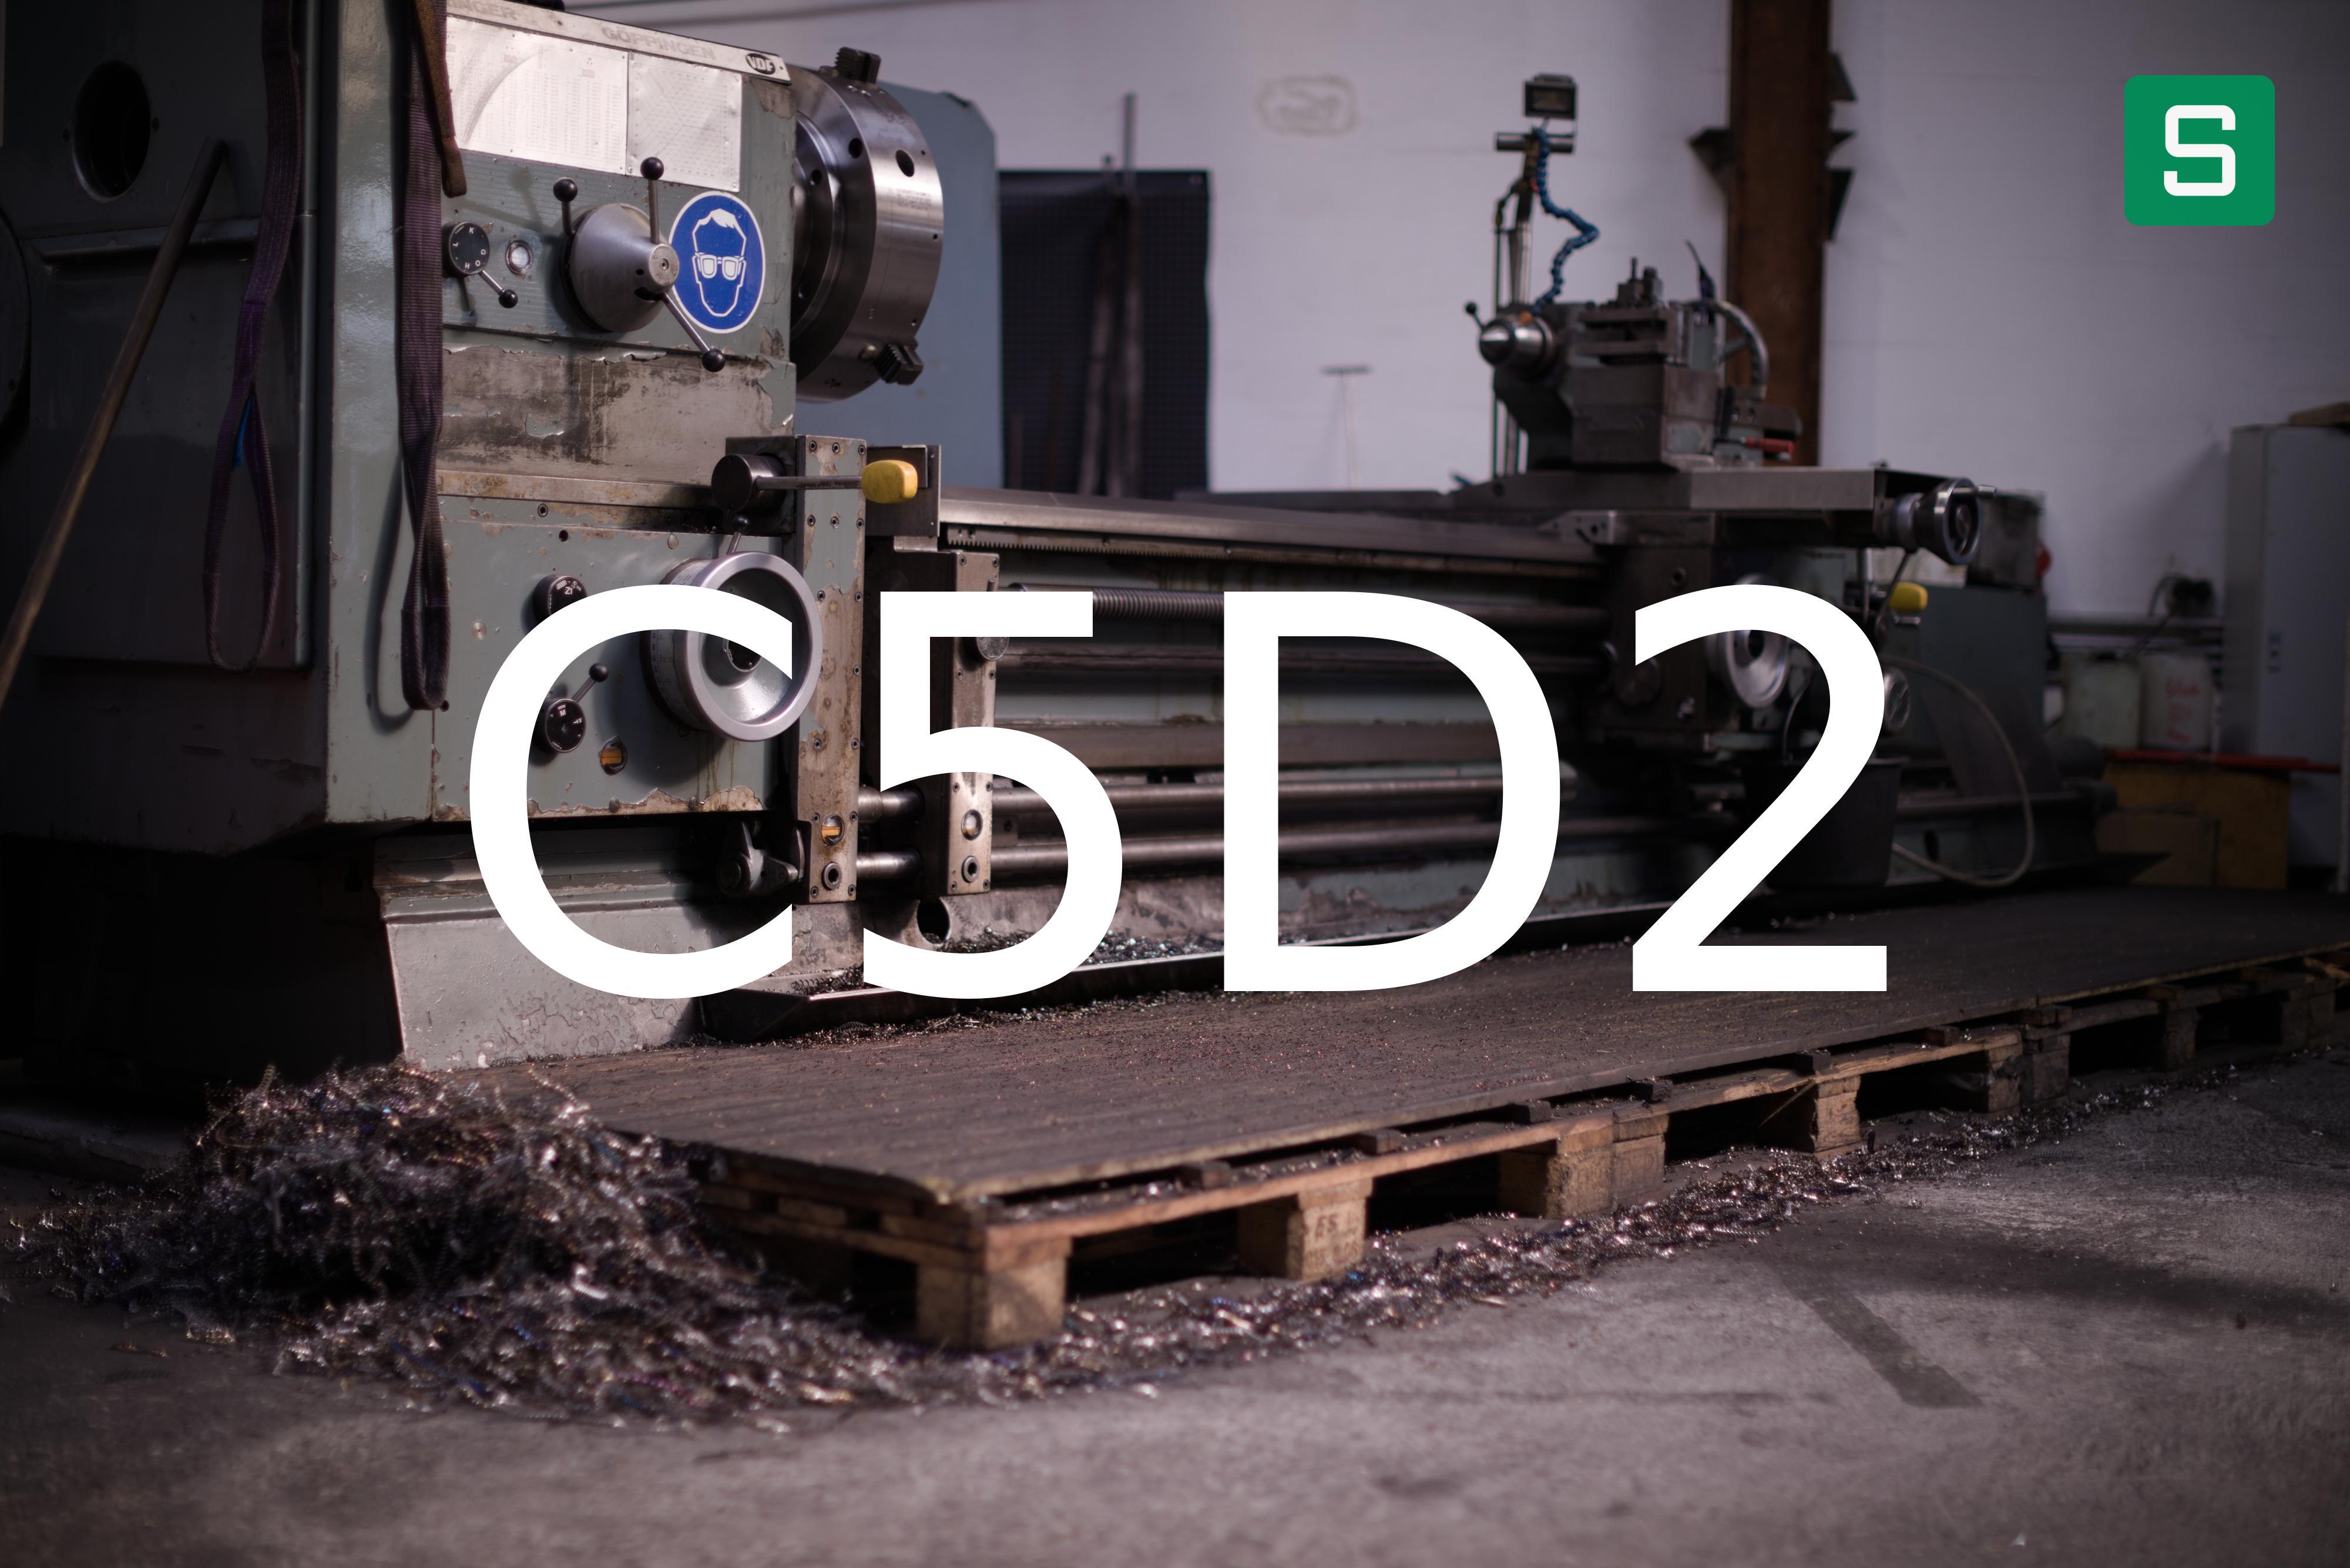 Steel Material: C5D2